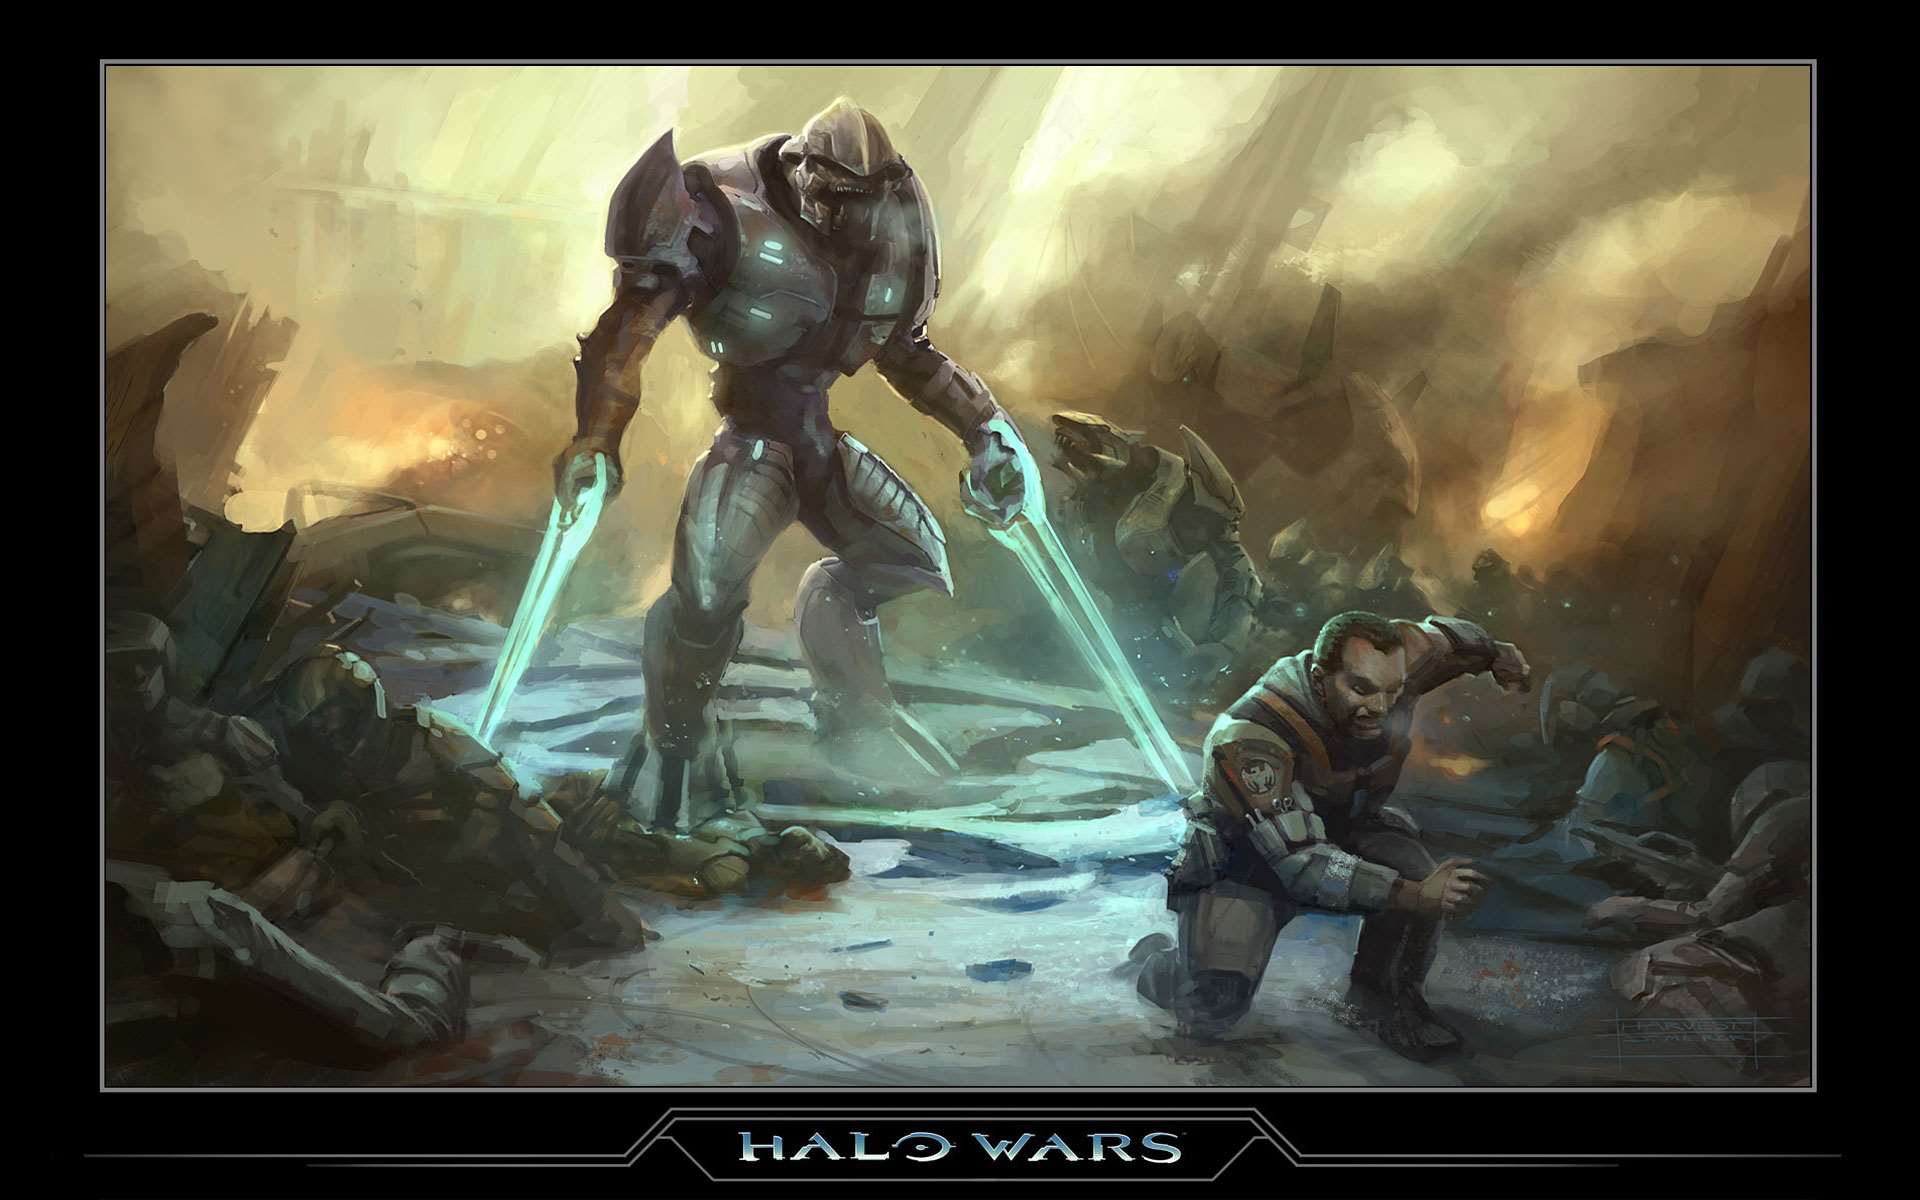 Halo Wars Official Halo Wars Wallpaper Concept 2 Wallpaper